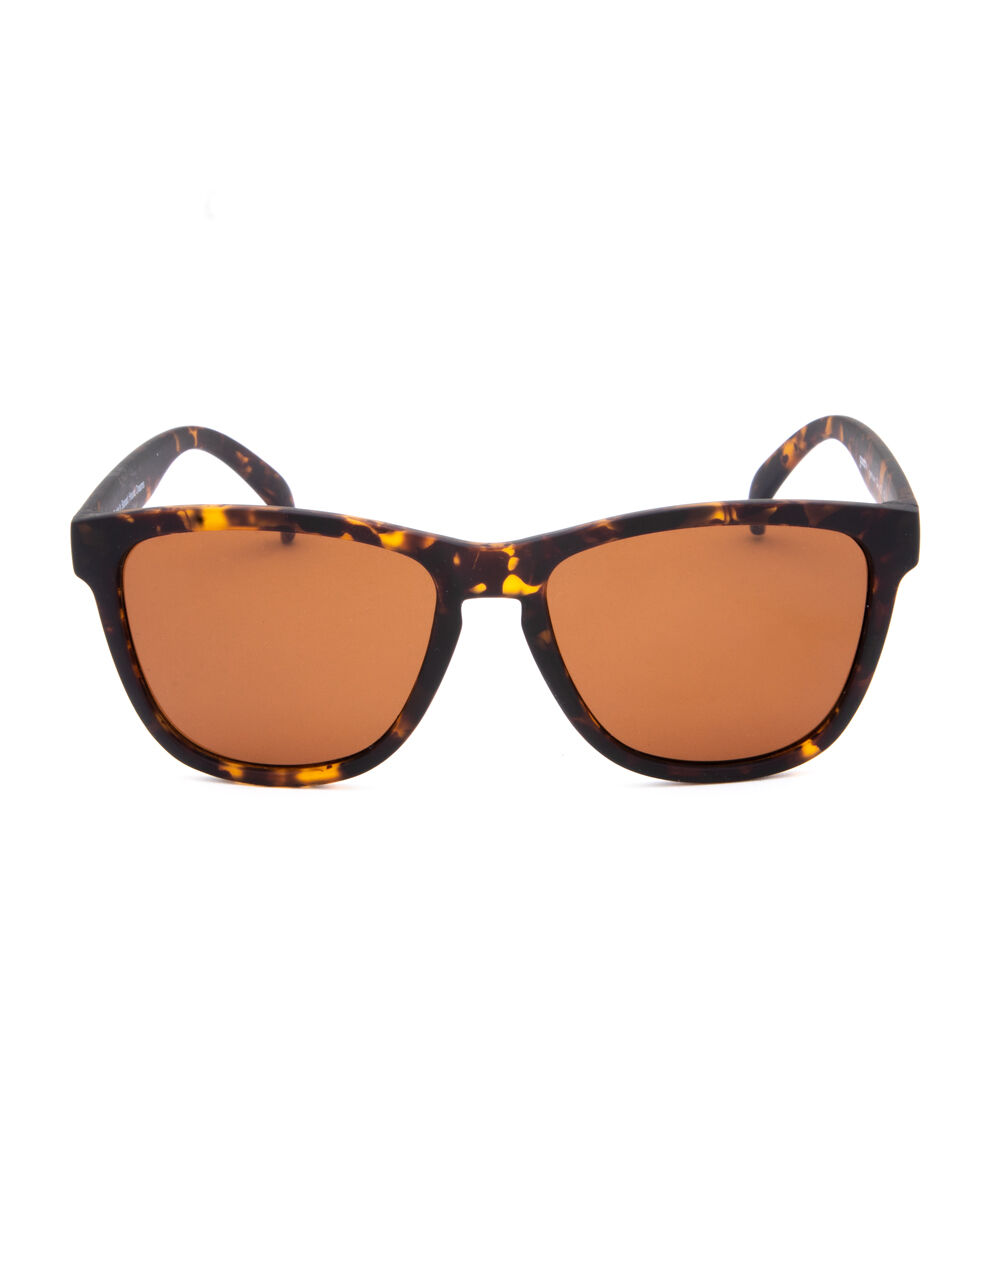 GOODR The OGs Bosleys Basset Hound Dreams Polarized Sunglasses - TORTO ...